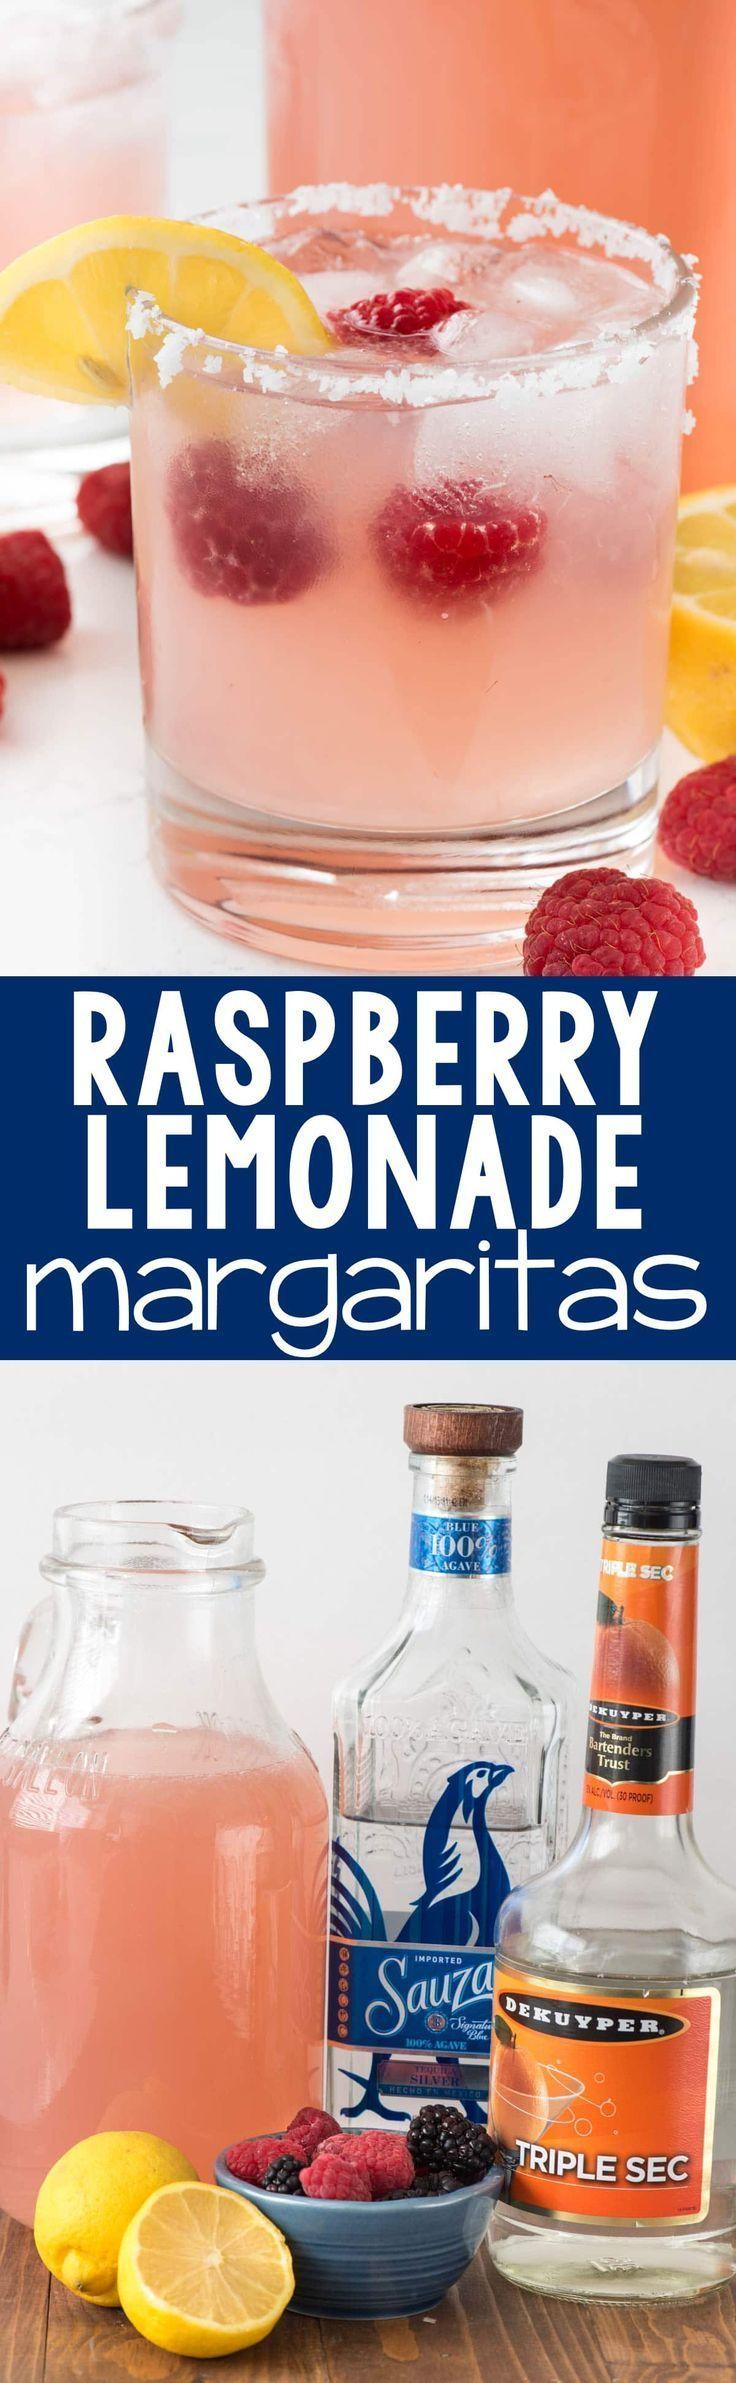 زفاف - Raspberry Lemonade Margaritas